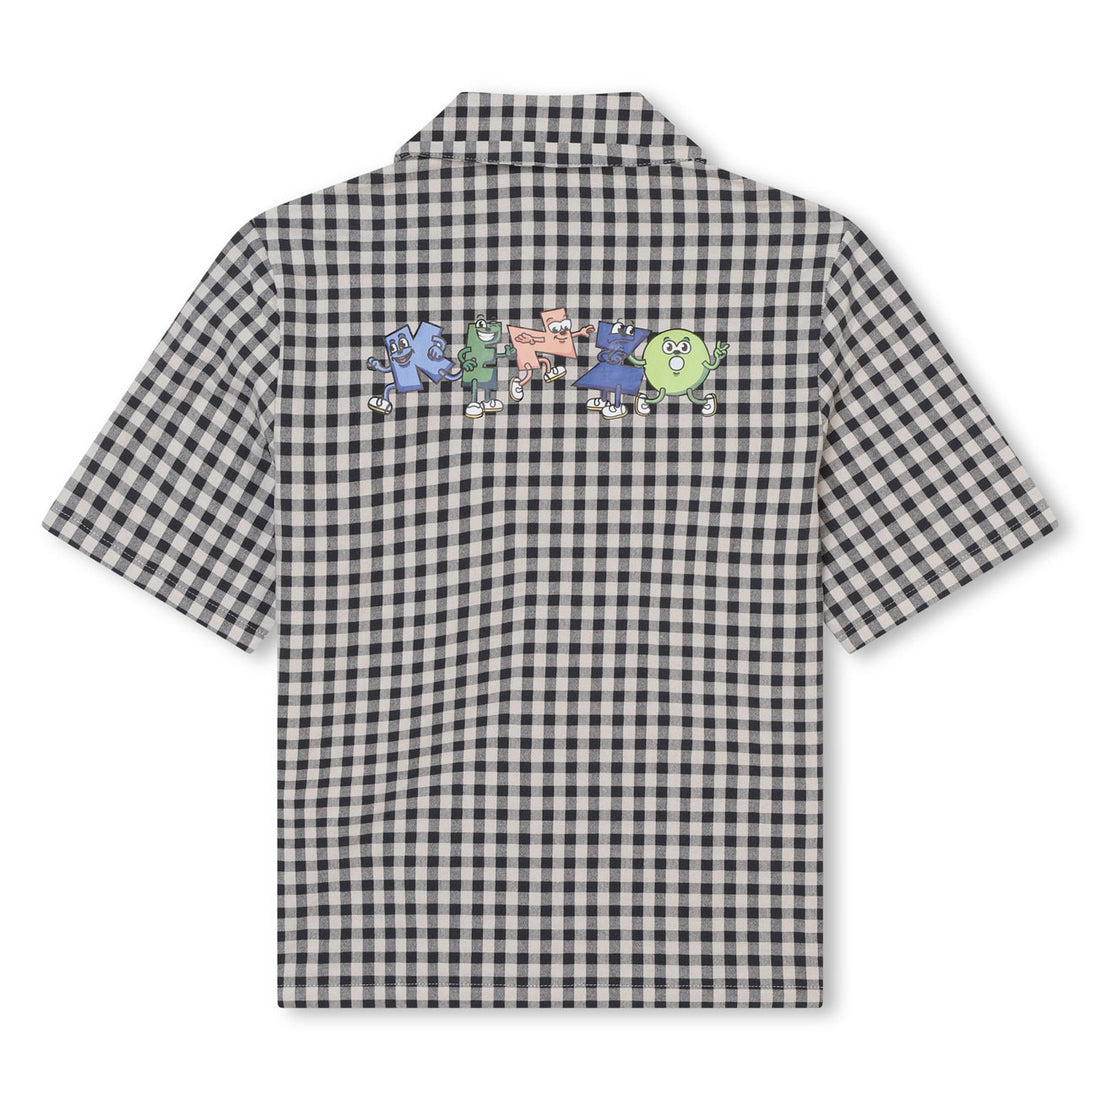 Kenzo Ecru/Grey Checkered Shirt